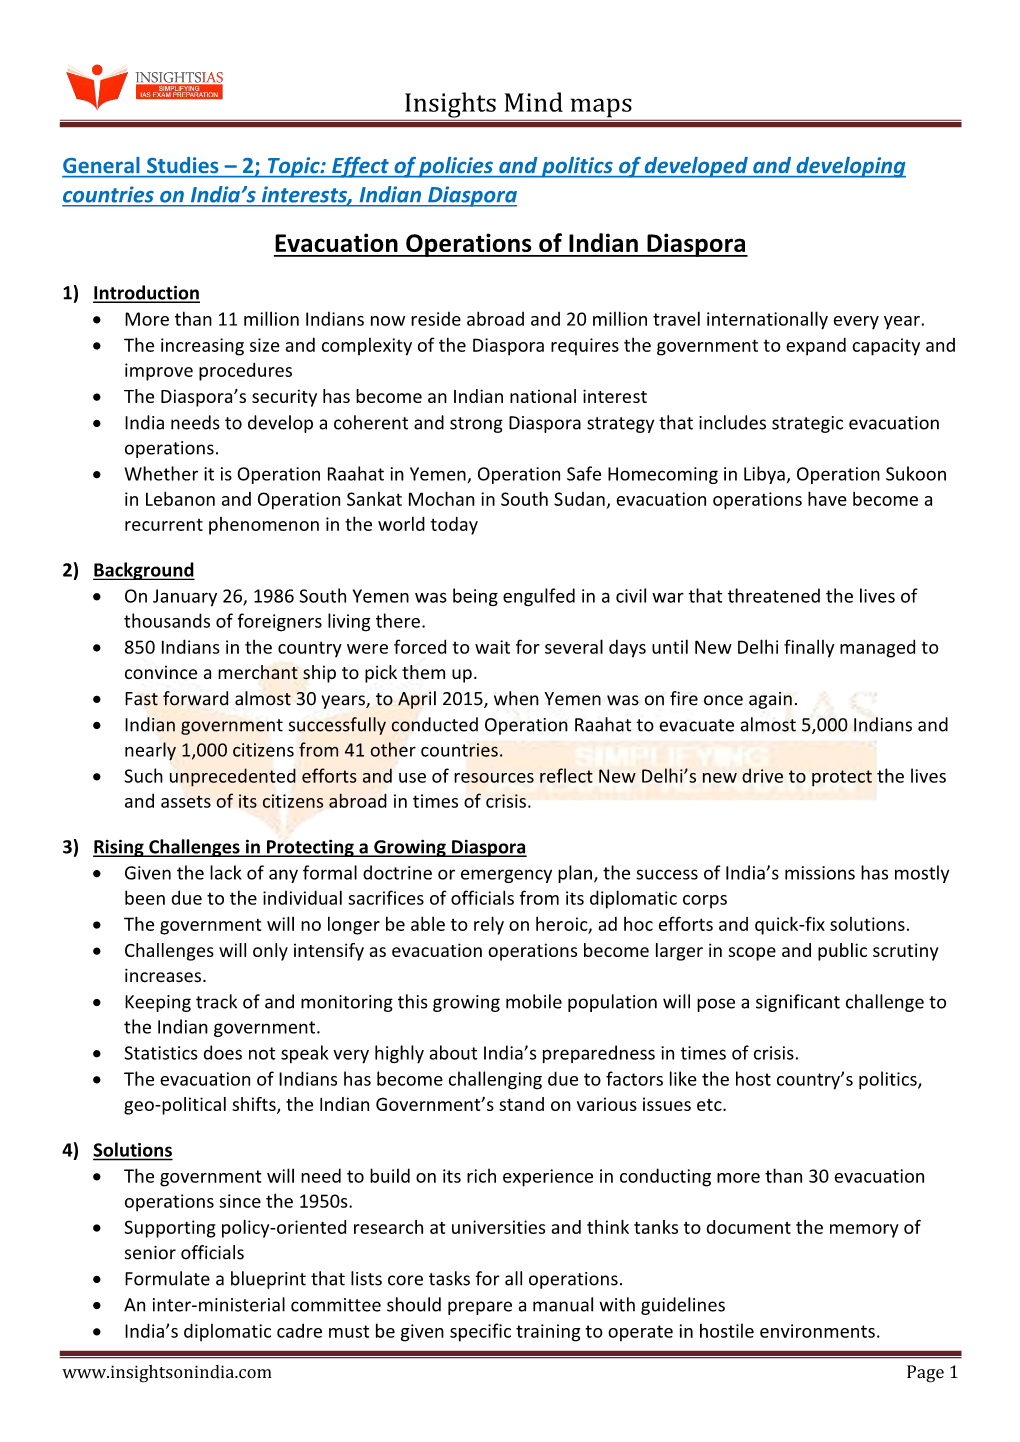 Evacuation Operations of Indian Diaspora